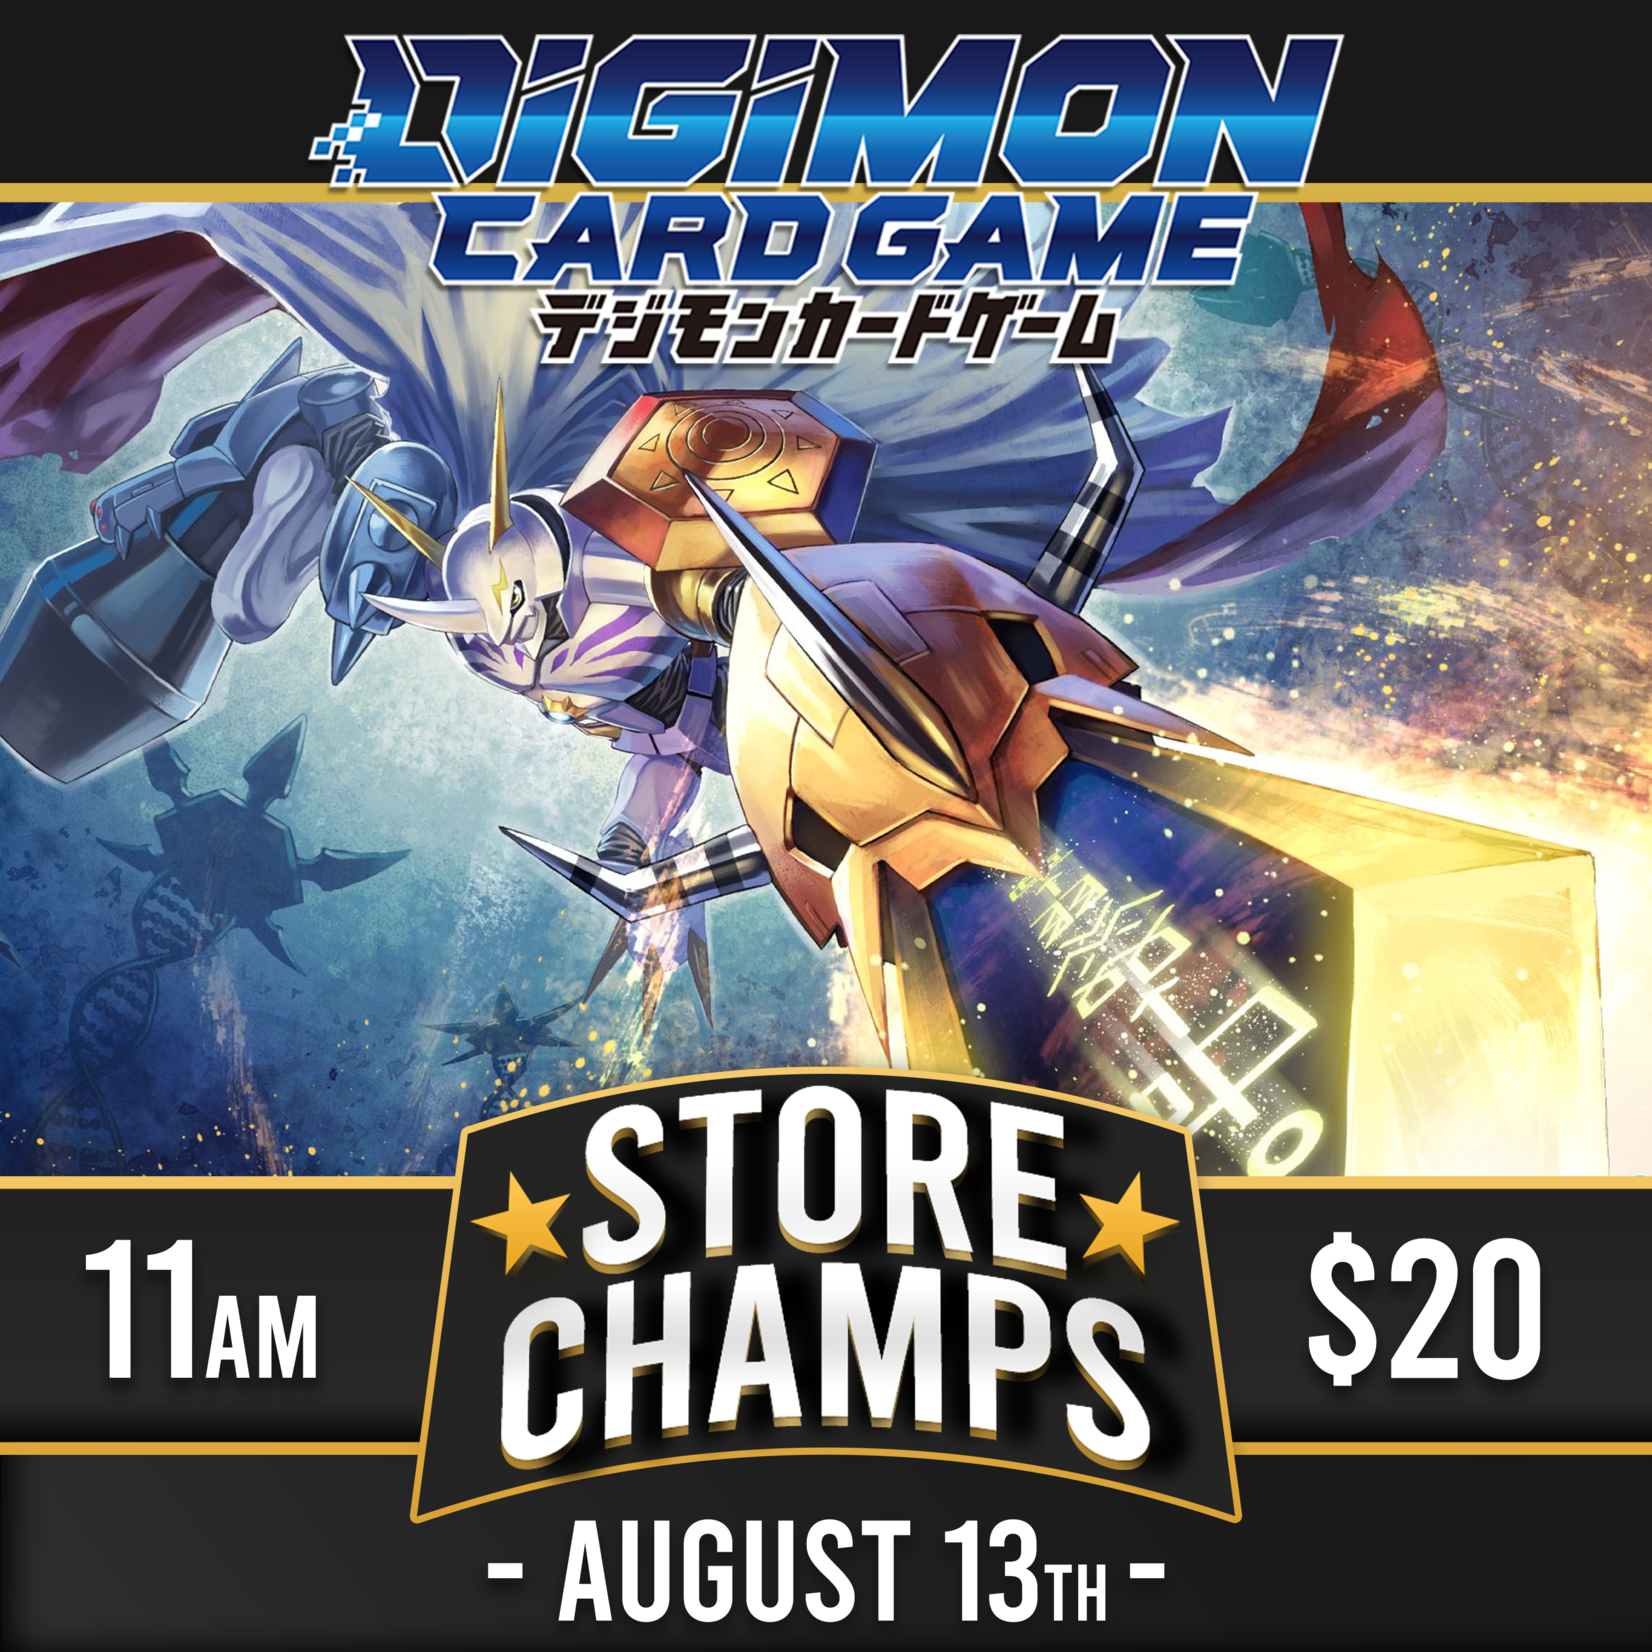 08/13 Saturday @ 11:00 AM - Digimon TCG Store Championship